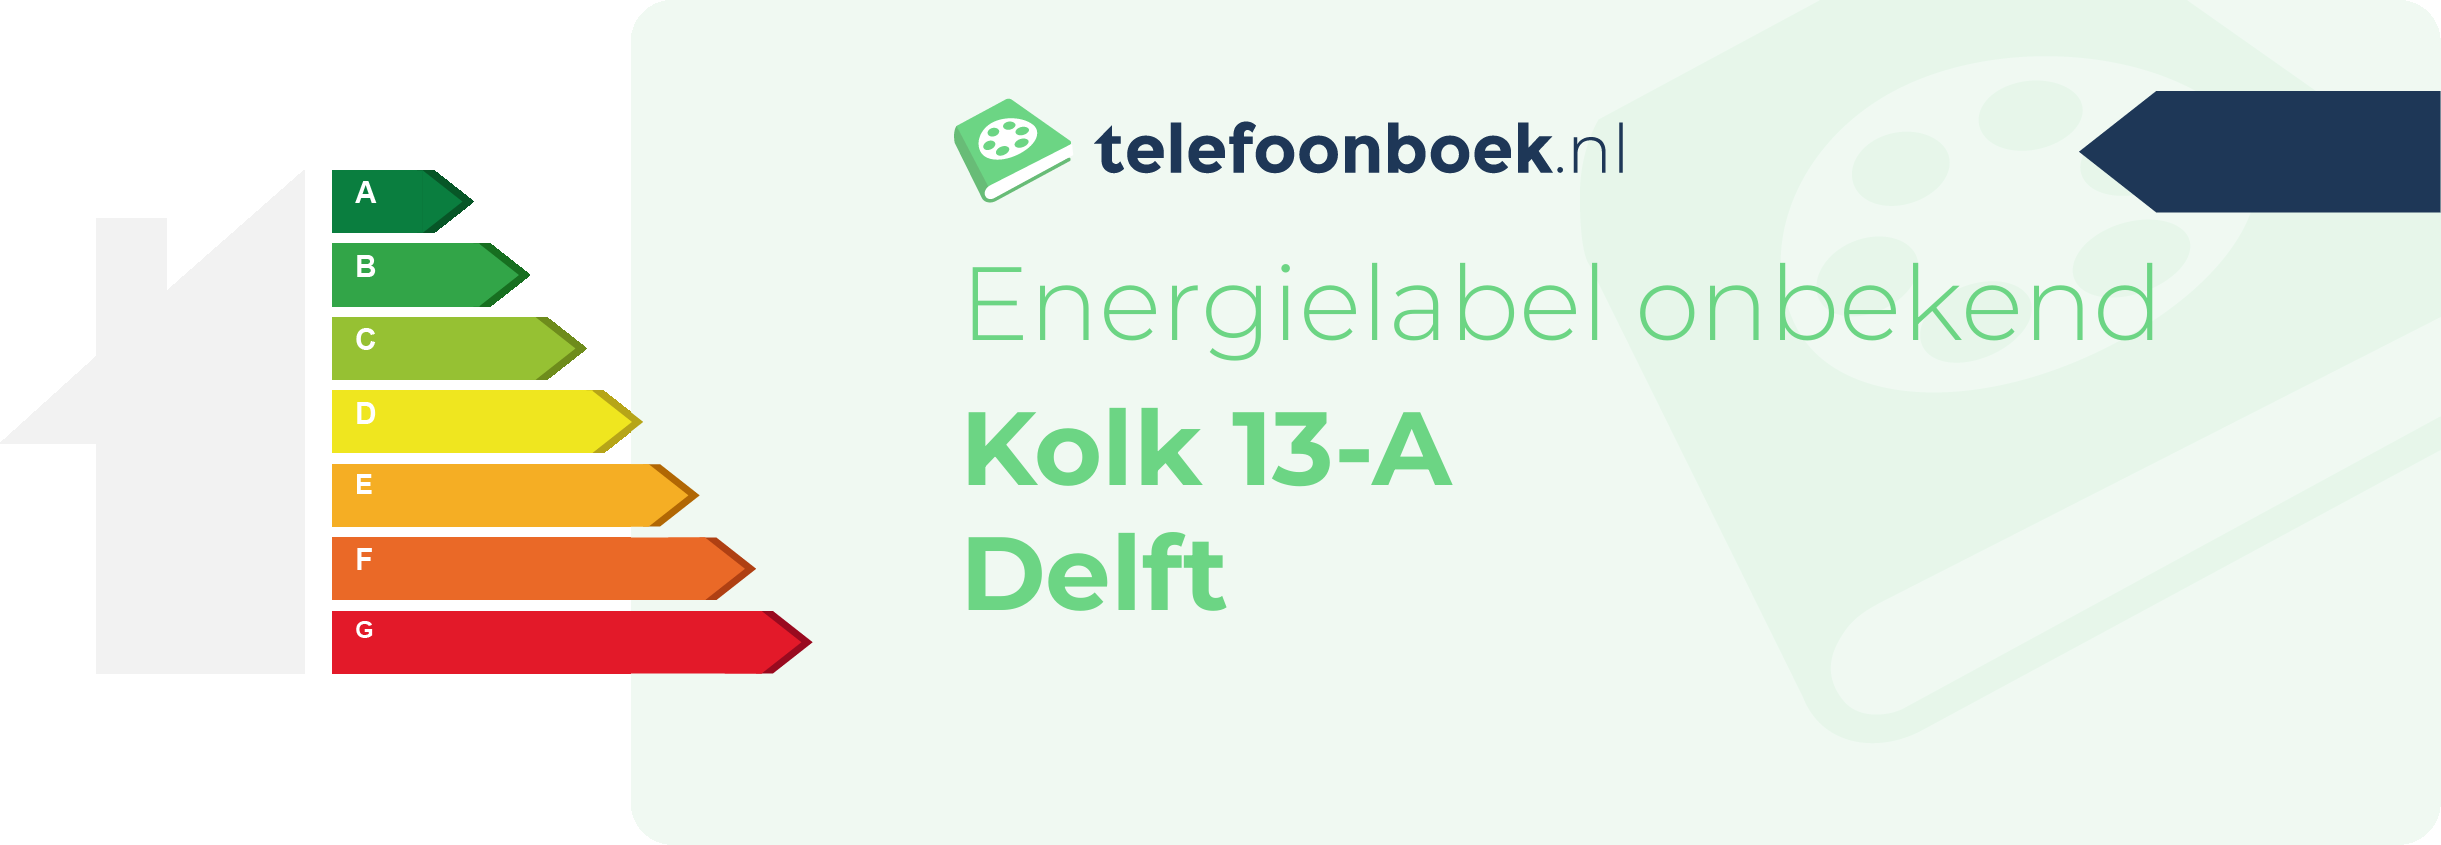 Energielabel Kolk 13-A Delft